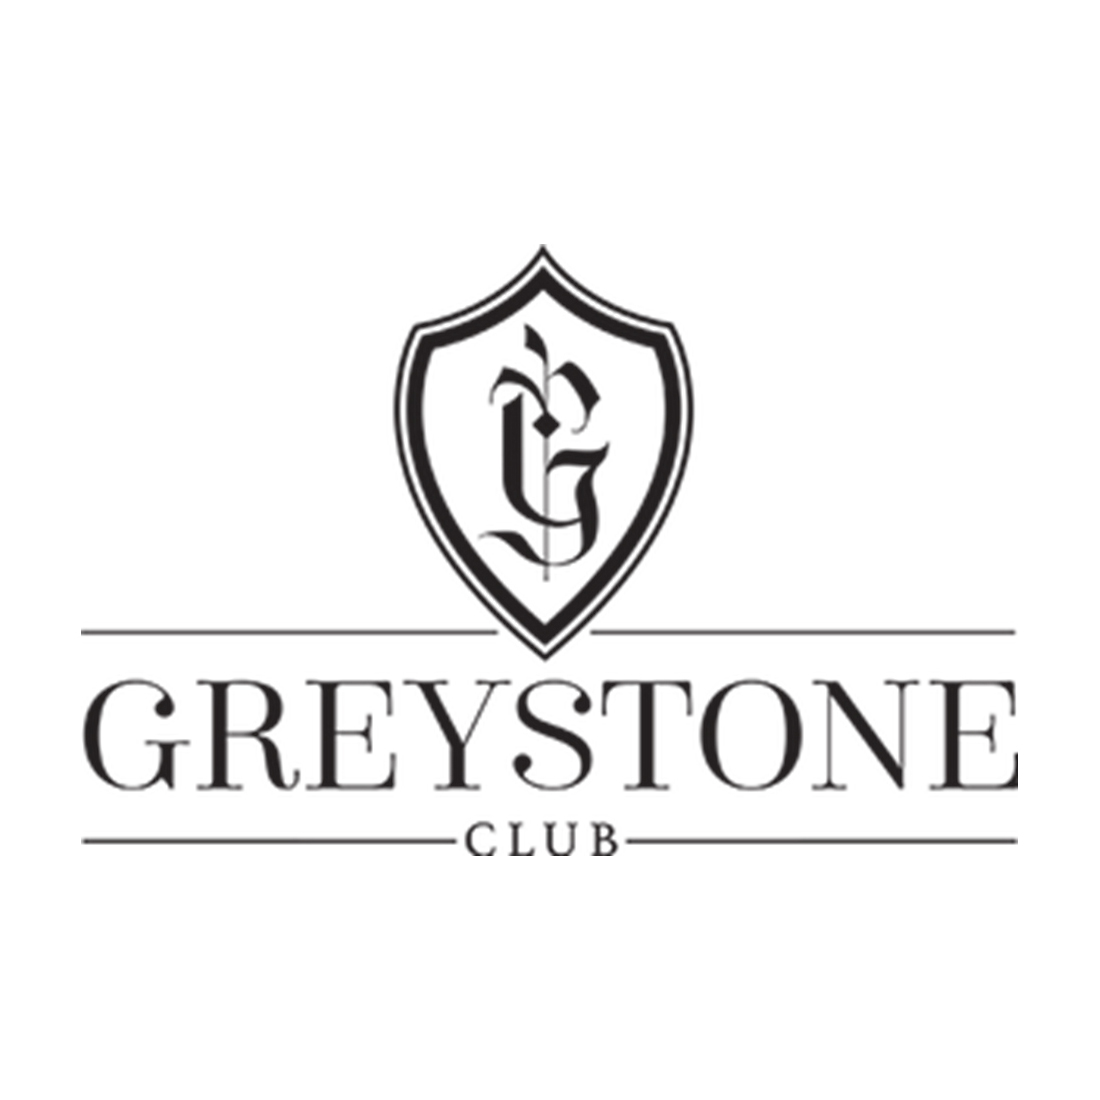 Greystone Club SQUARE v2